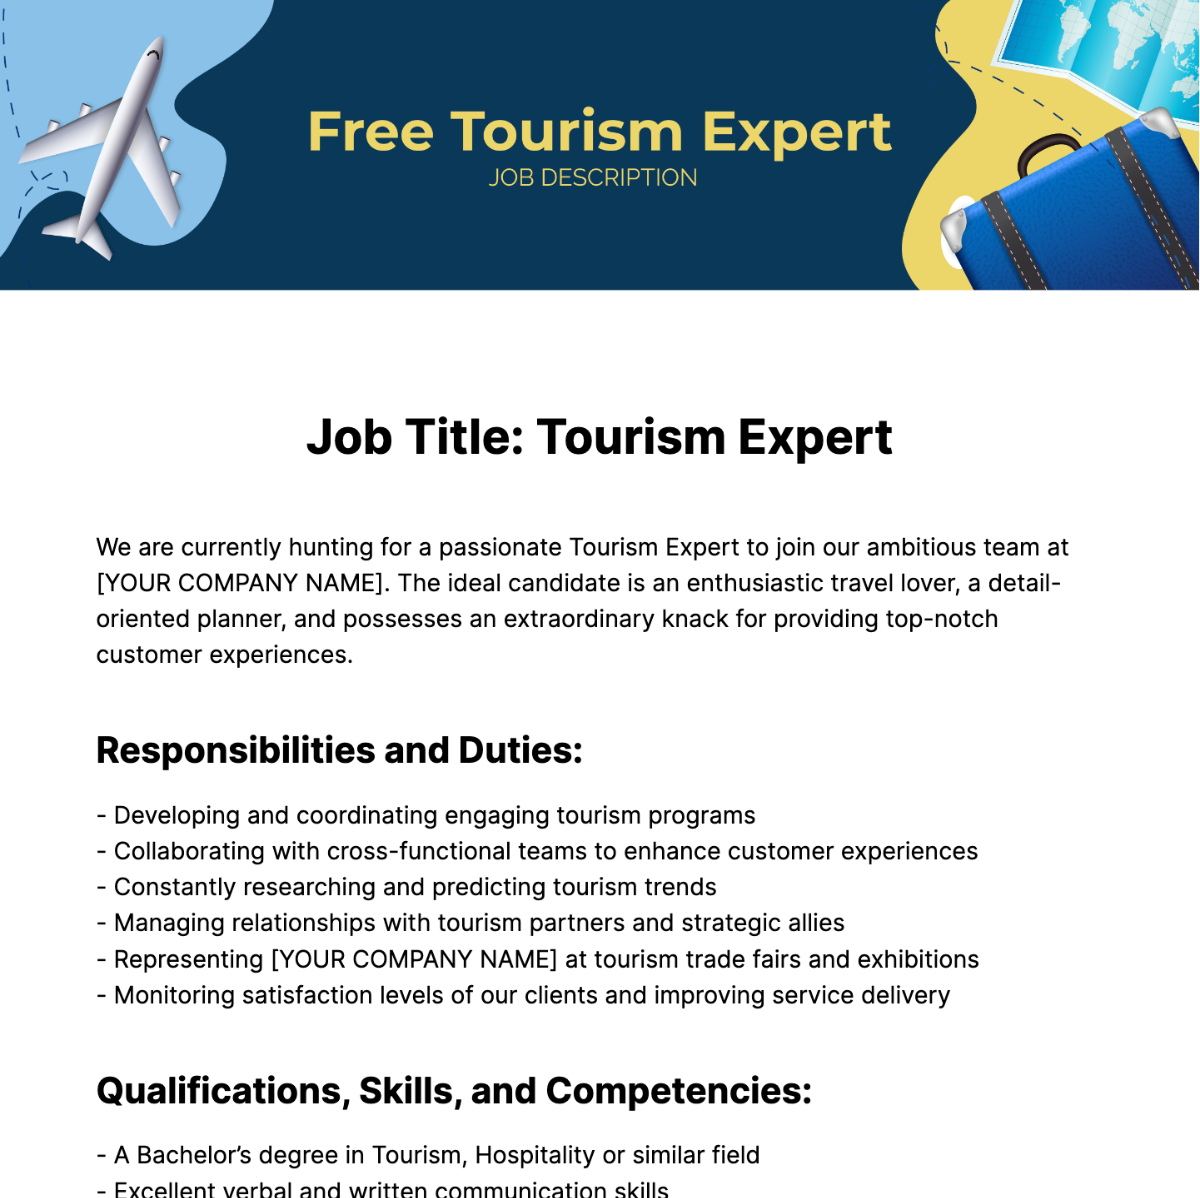 Free Tourism Expert Job Description Template